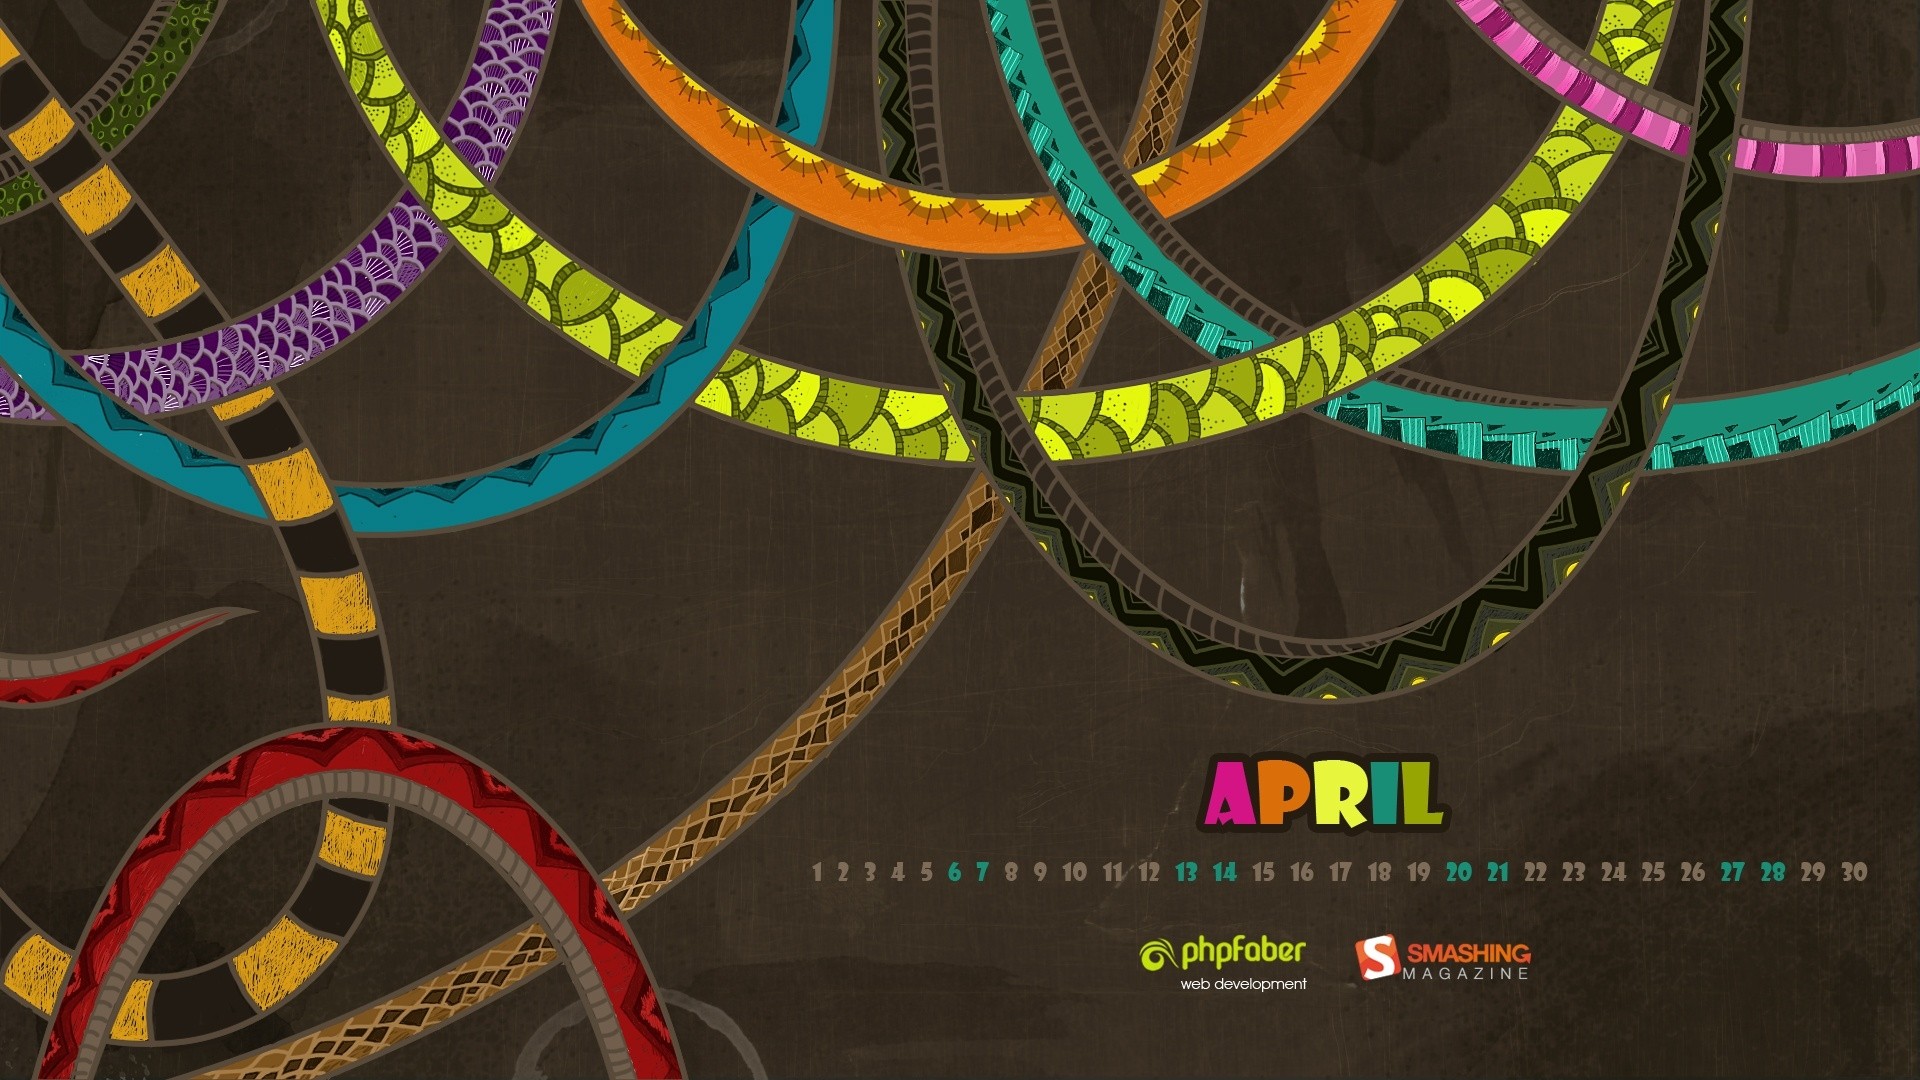 multicolor, Patterns, Calendar, Artwork, Arena, April, Smashing, Magazine, Brown, Background Wallpaper